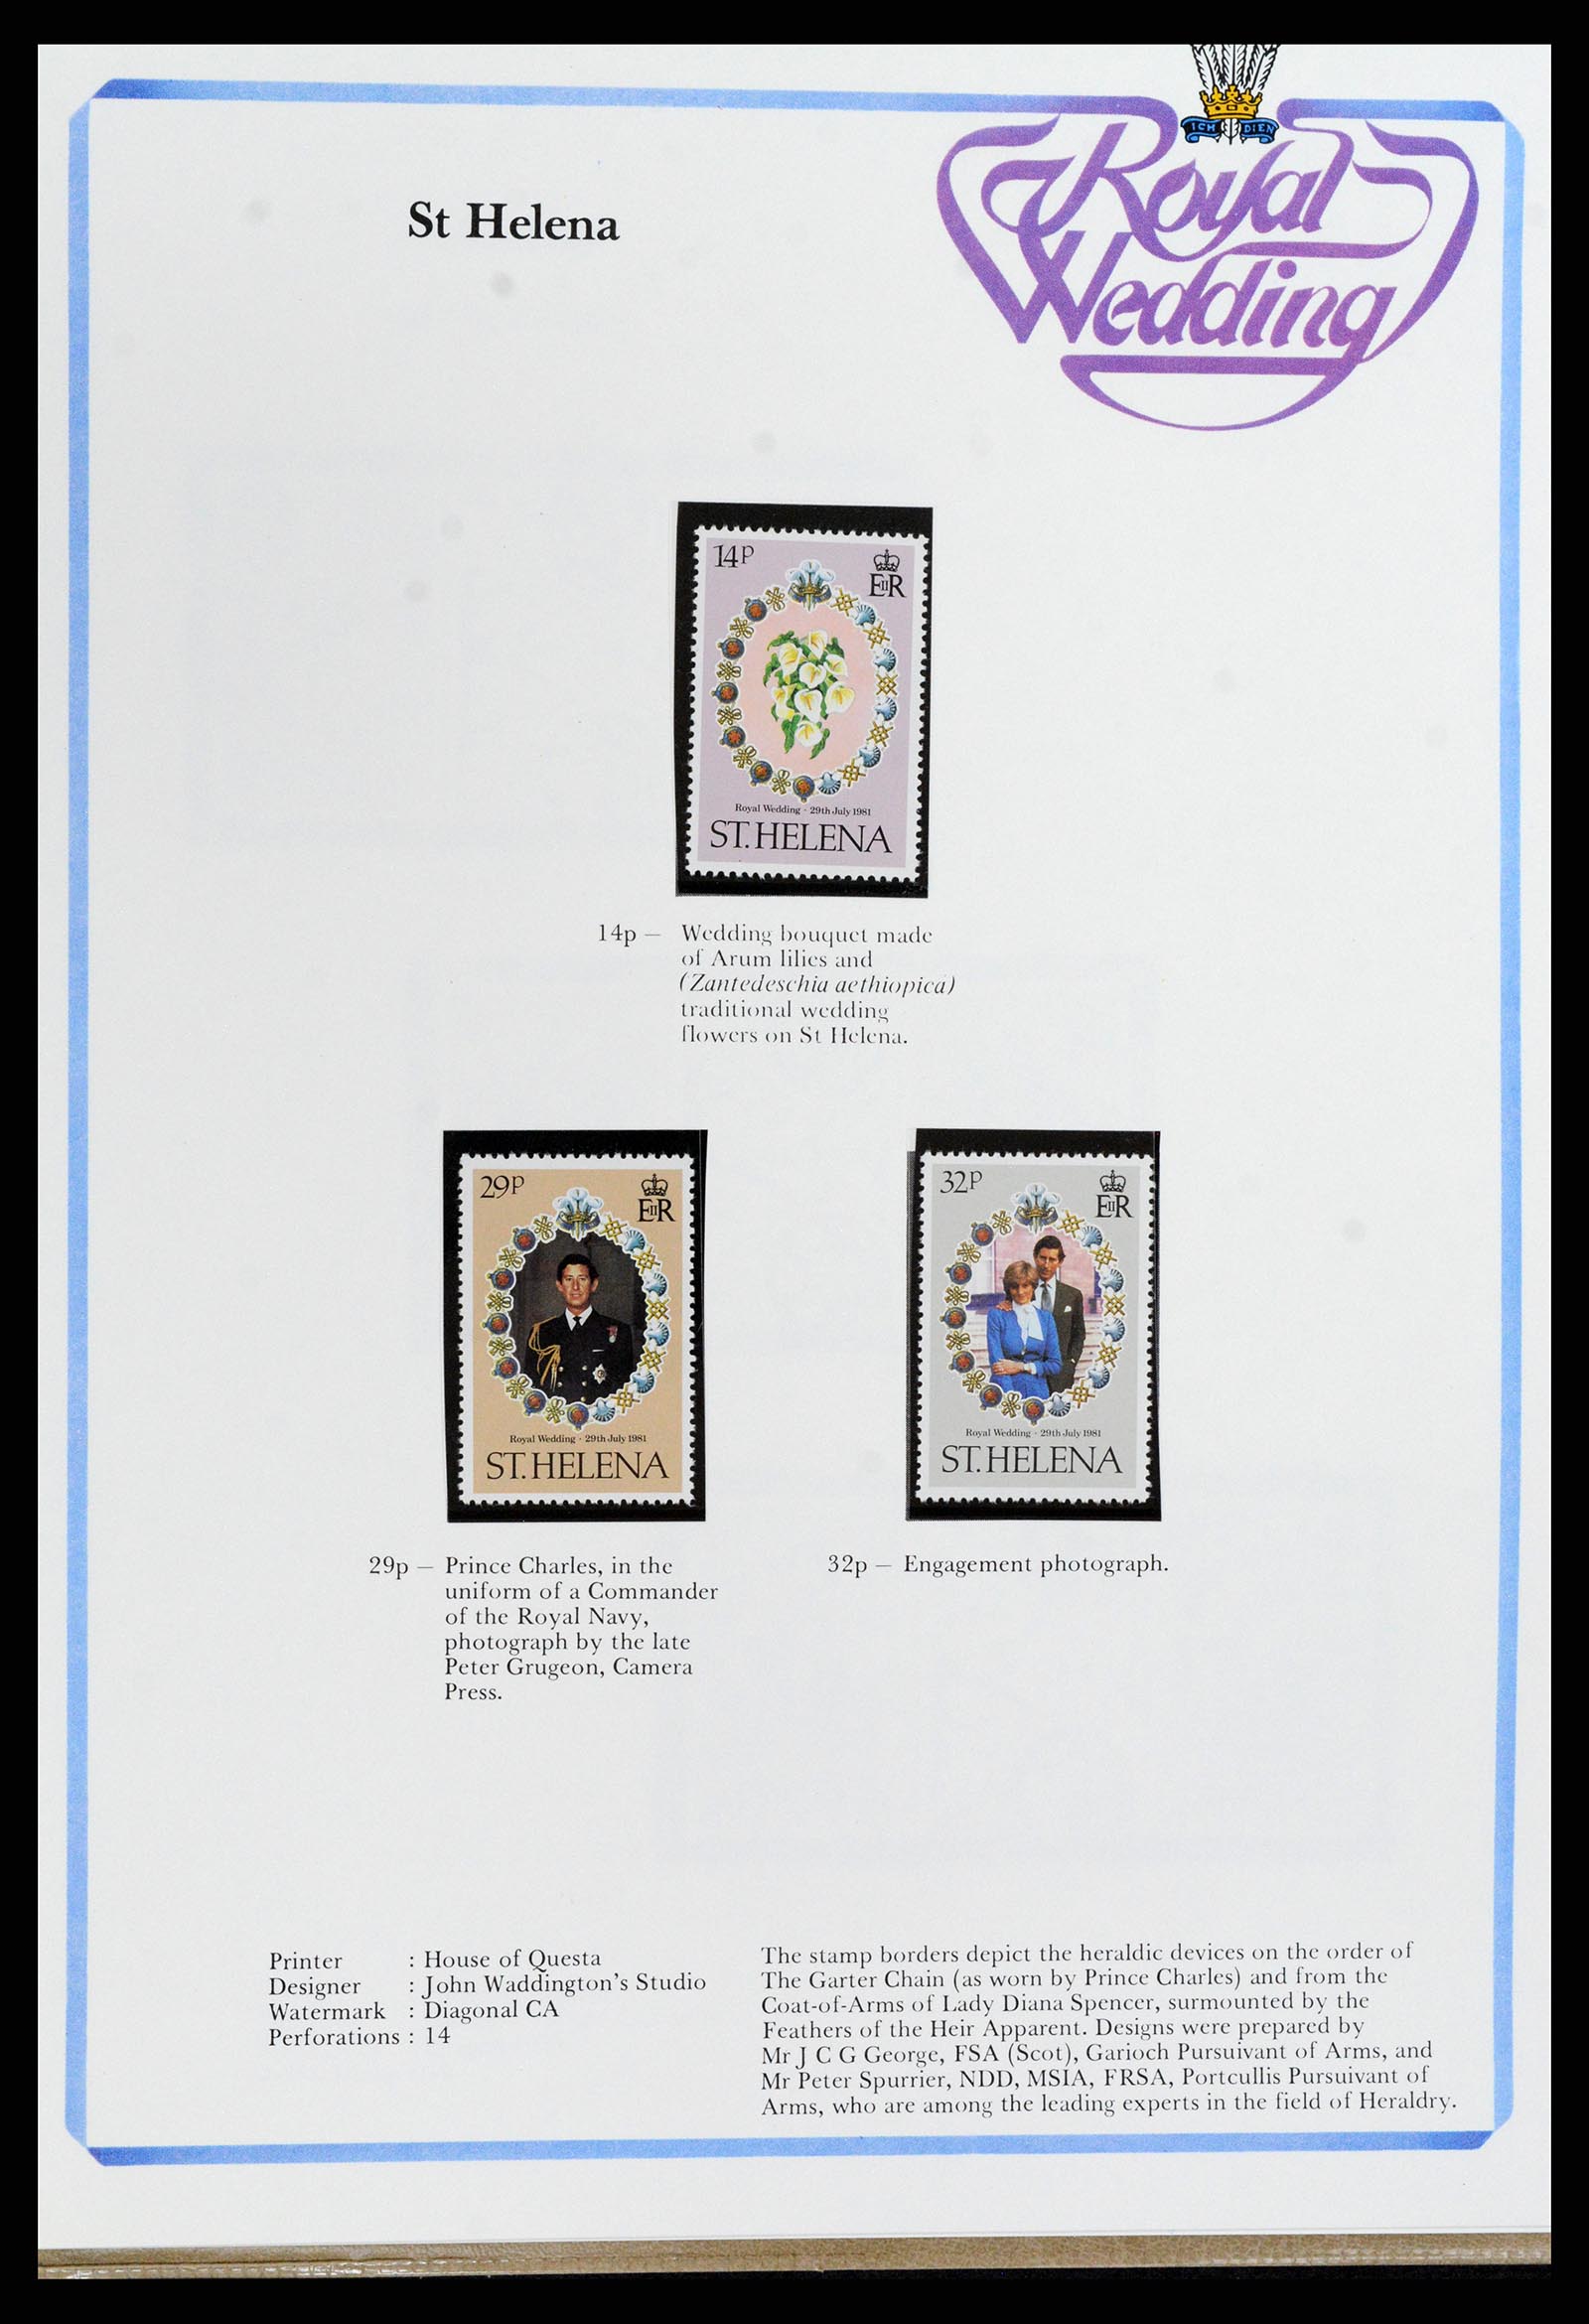 37818 295 - Stamp Collection 37818 Royal Wedding 1981.